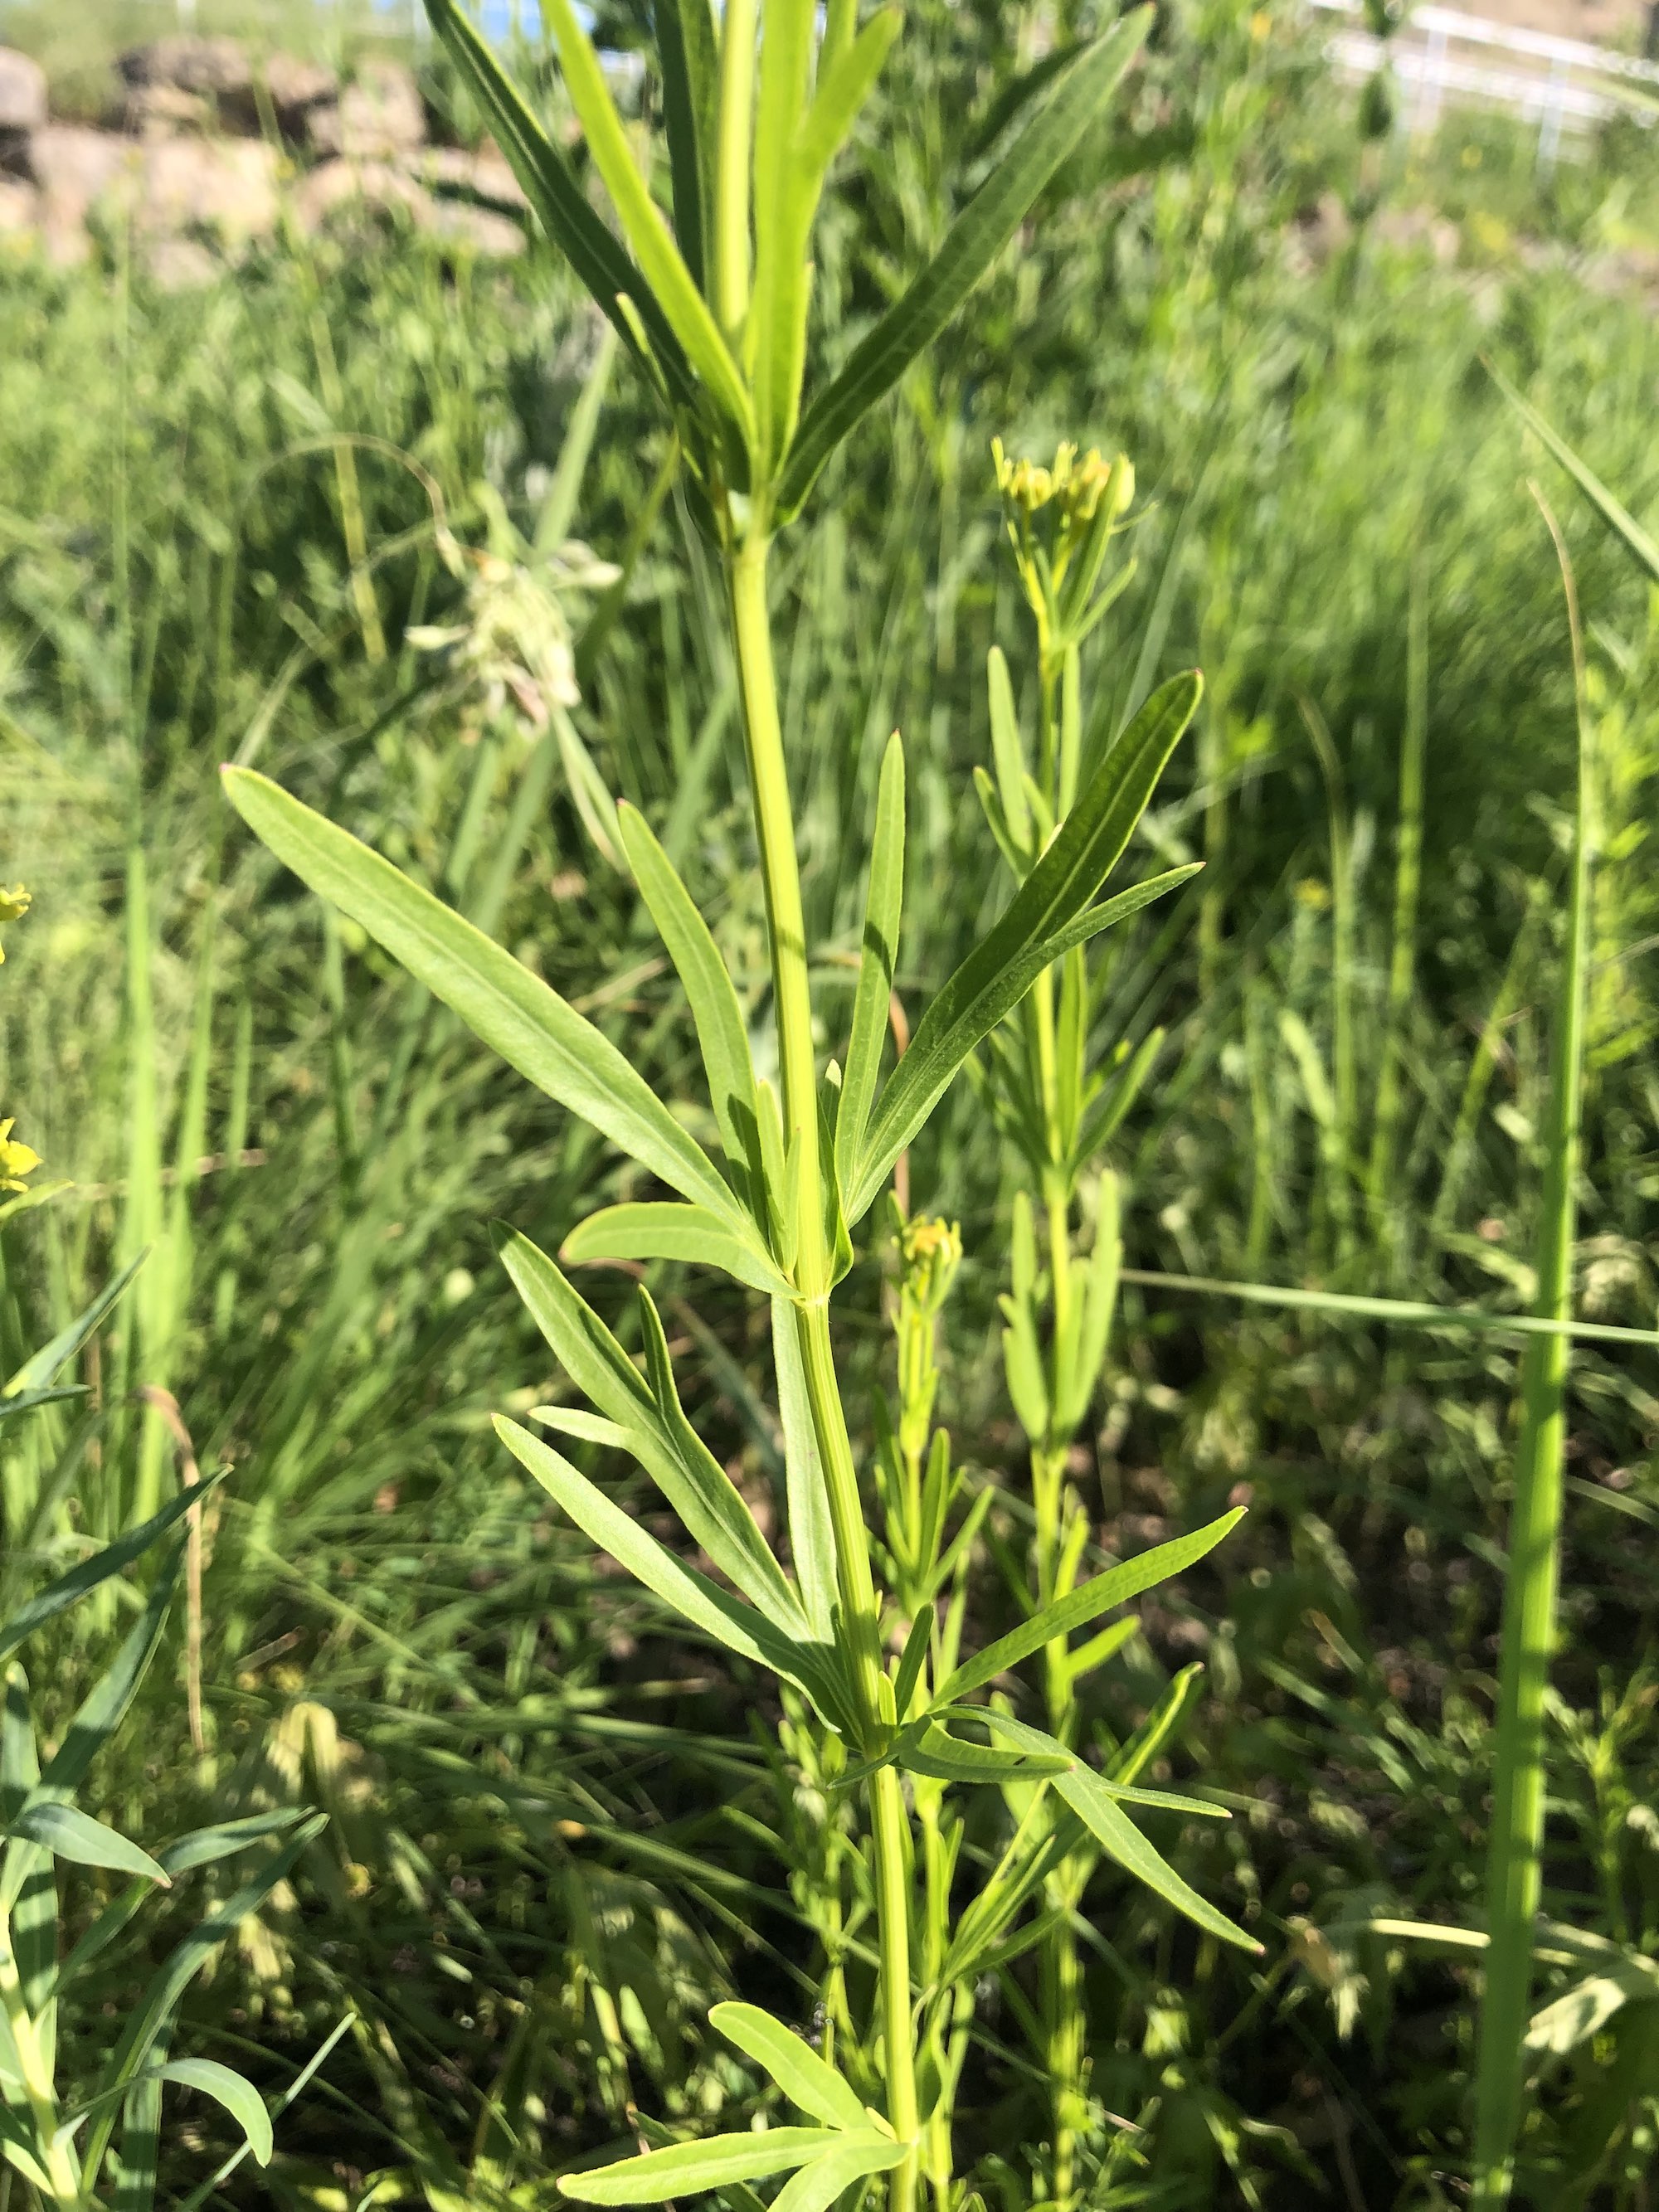 Prairie Coreopsis in UW Arboretum near Visitors Center in Madison, Wisconsin on June 16, 2021.